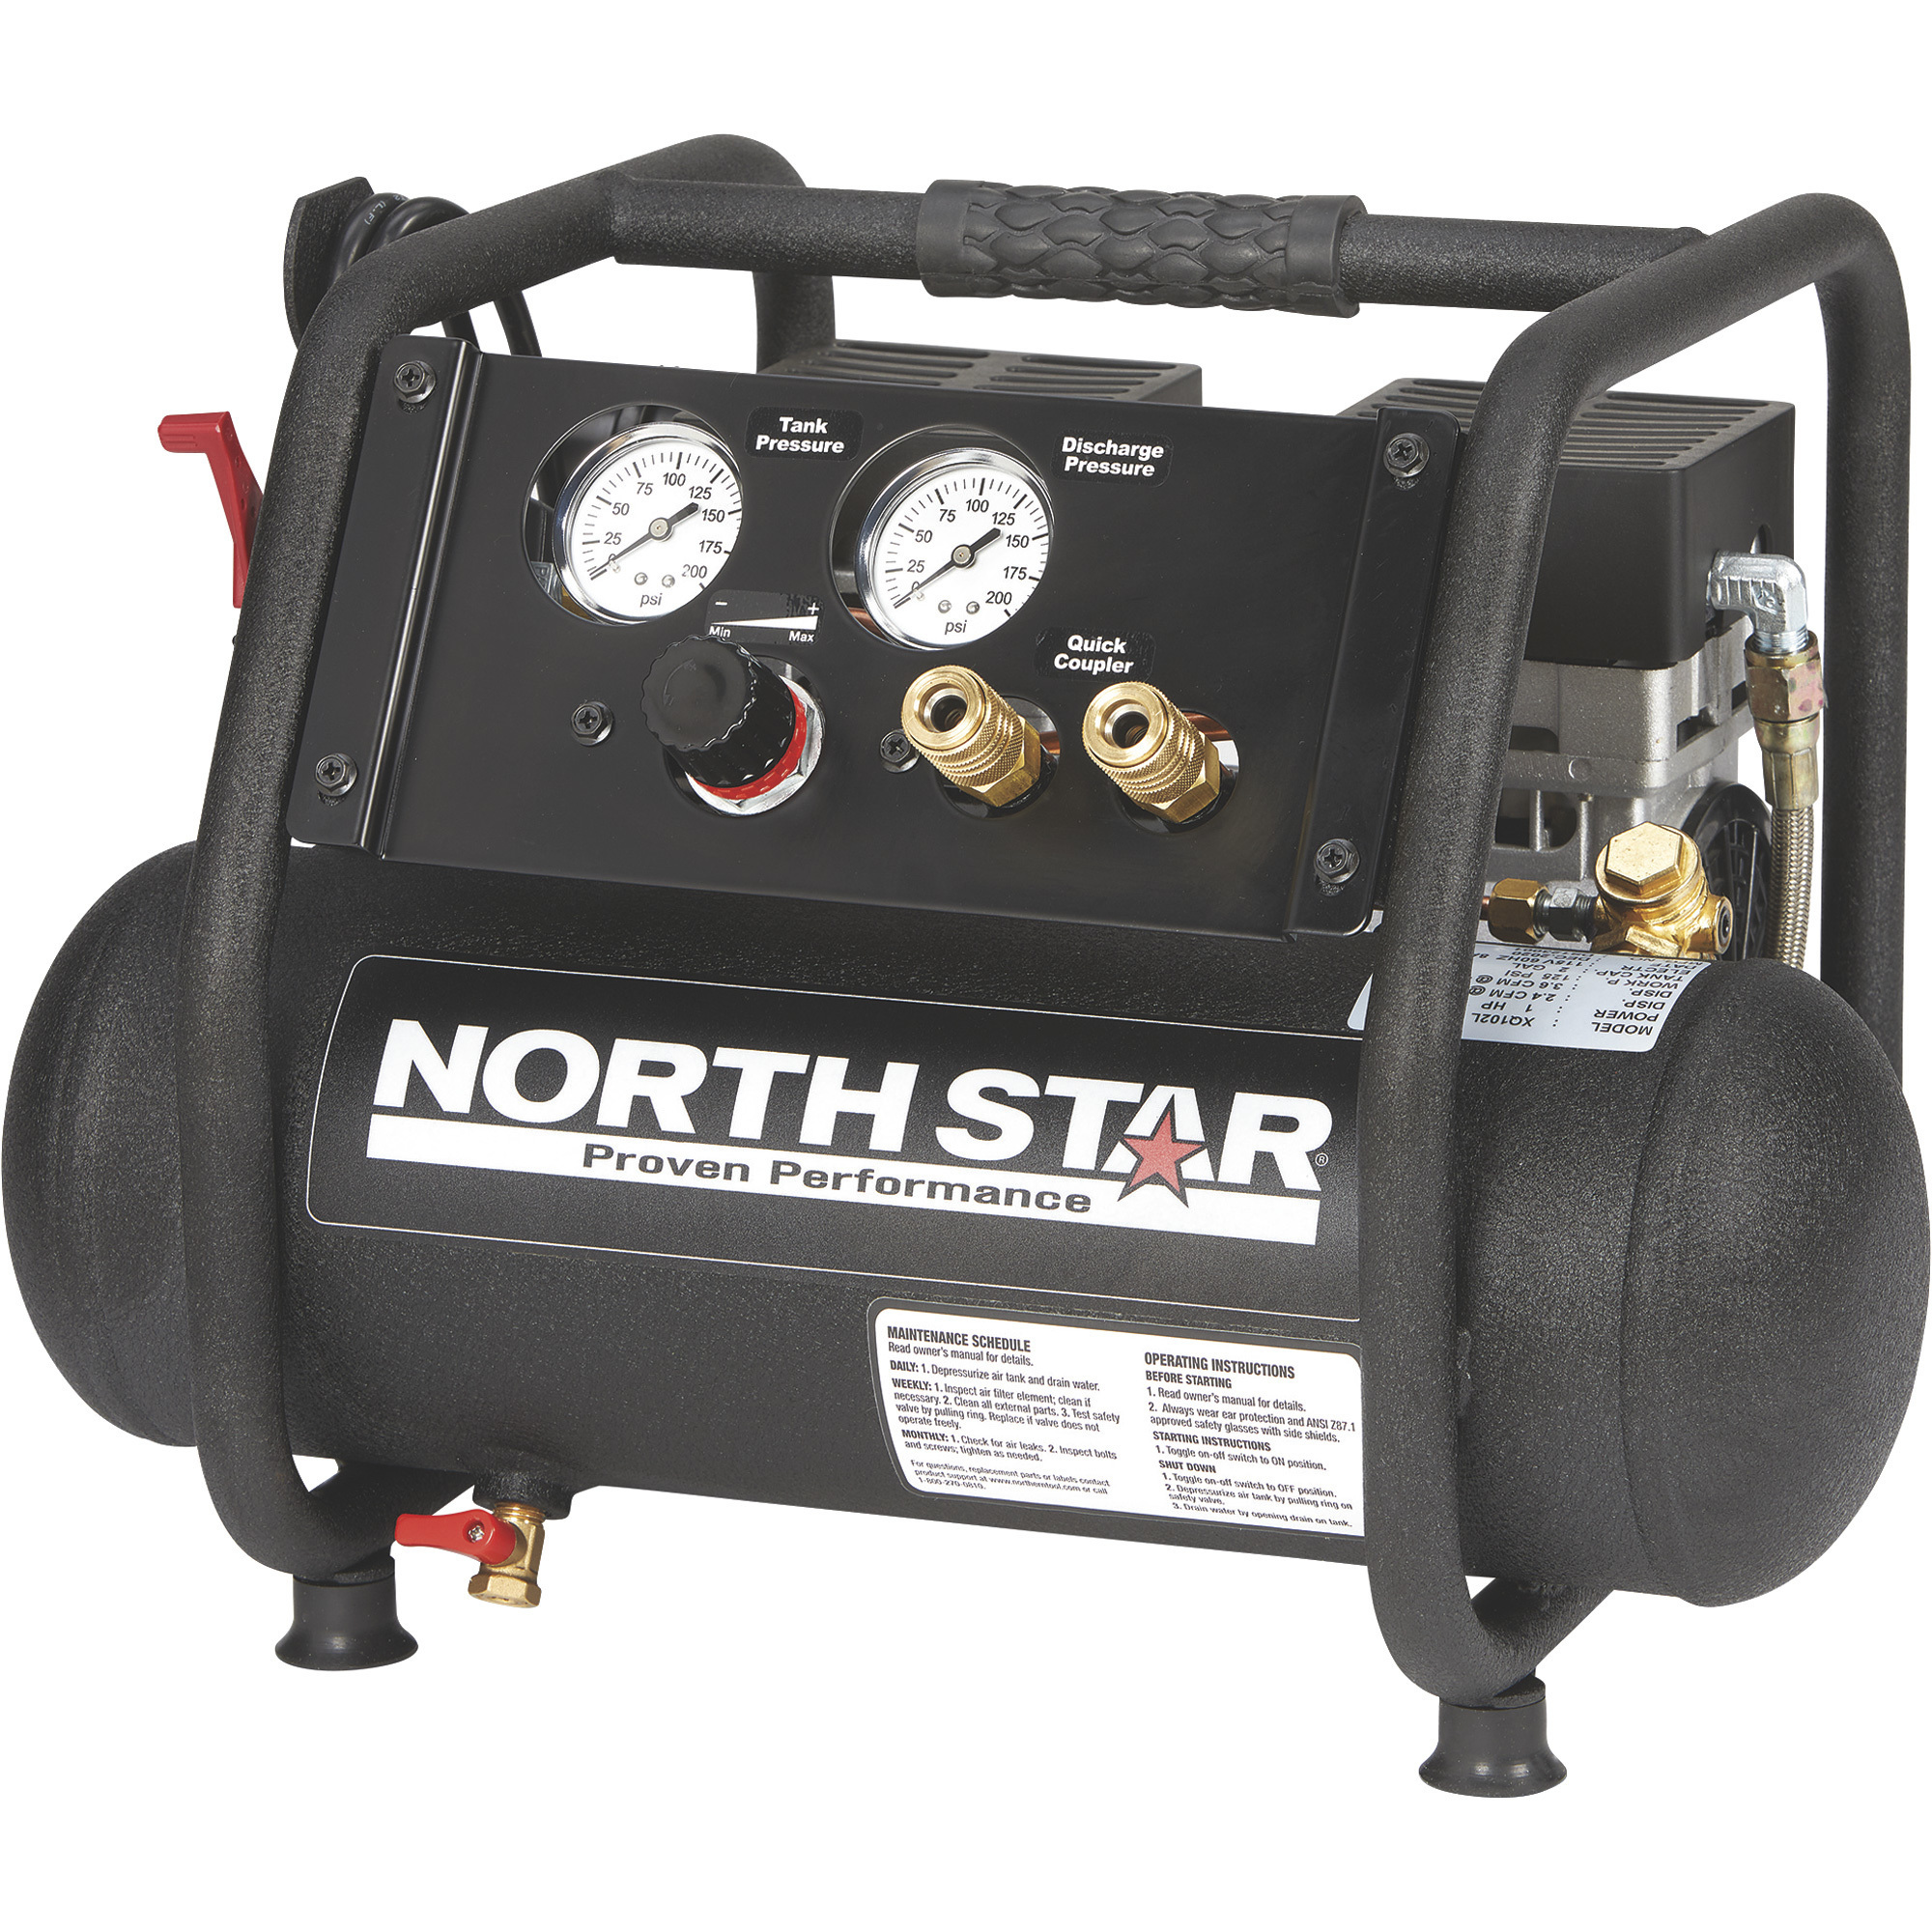 NorthStar Portable Electric Air Compressor â 1 HP, 2-Gallon, Super-Quiet Operation, Oil-Free Pump, 2.4 CFM @ 90 PSI